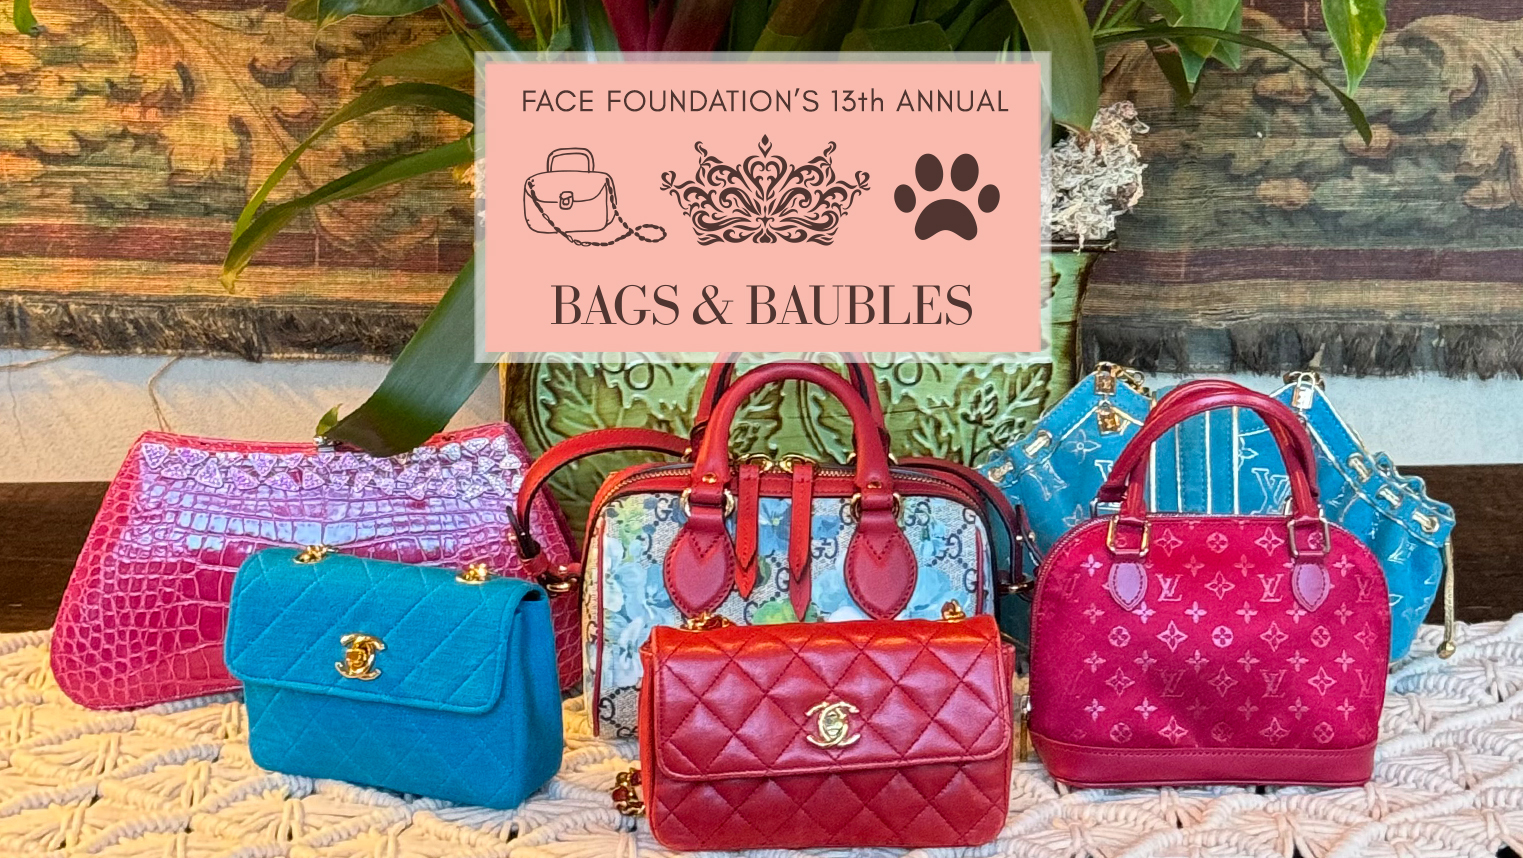 Bags & Baubles 2024